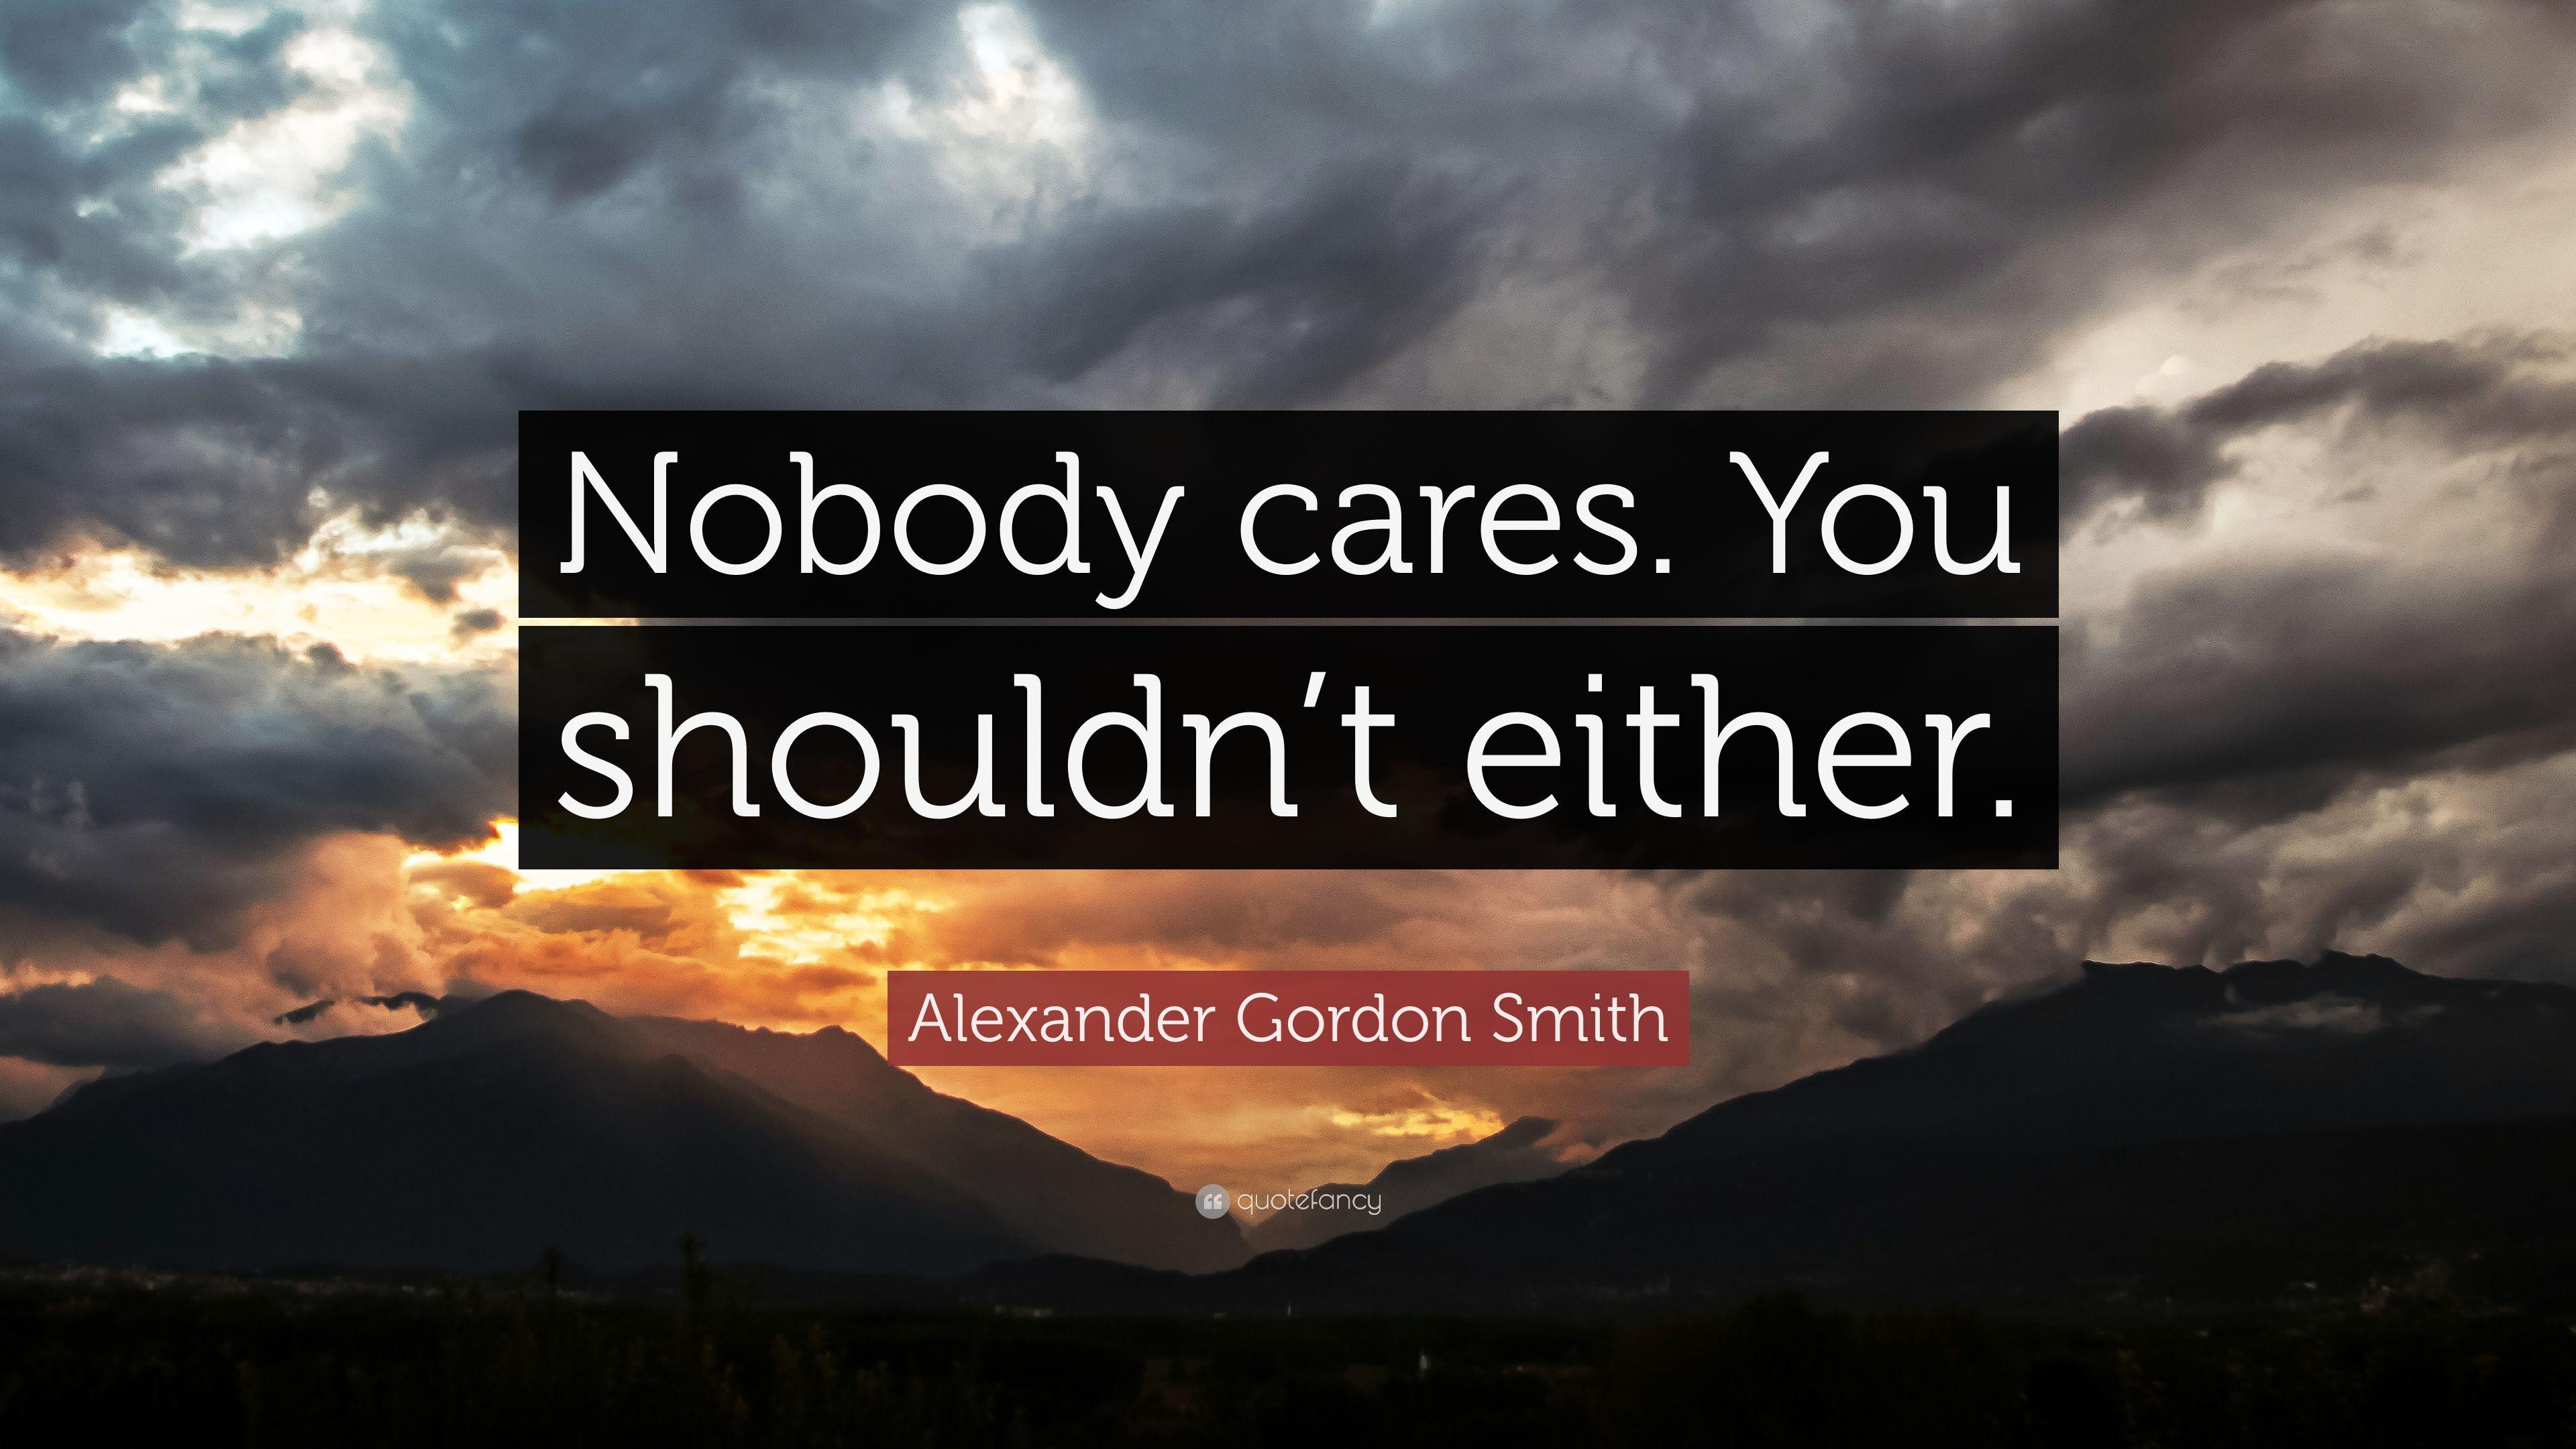 Alexander Gordon Smith Quote: “Nobody cares. You shouldn't either